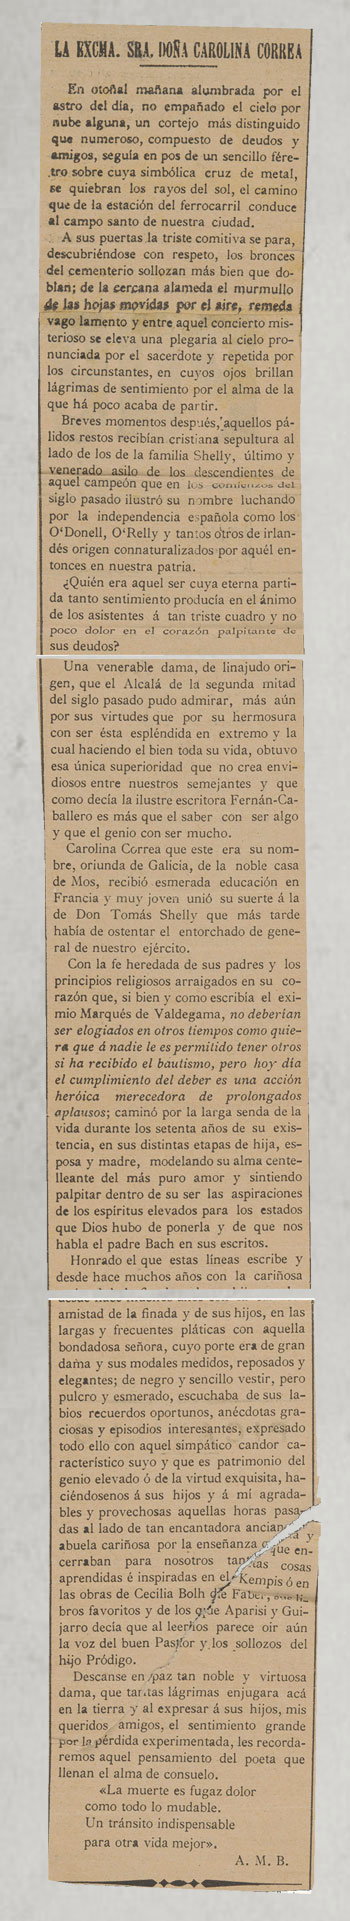 Obituario de Carolina Correa Sotomayor en publicación desconocida.